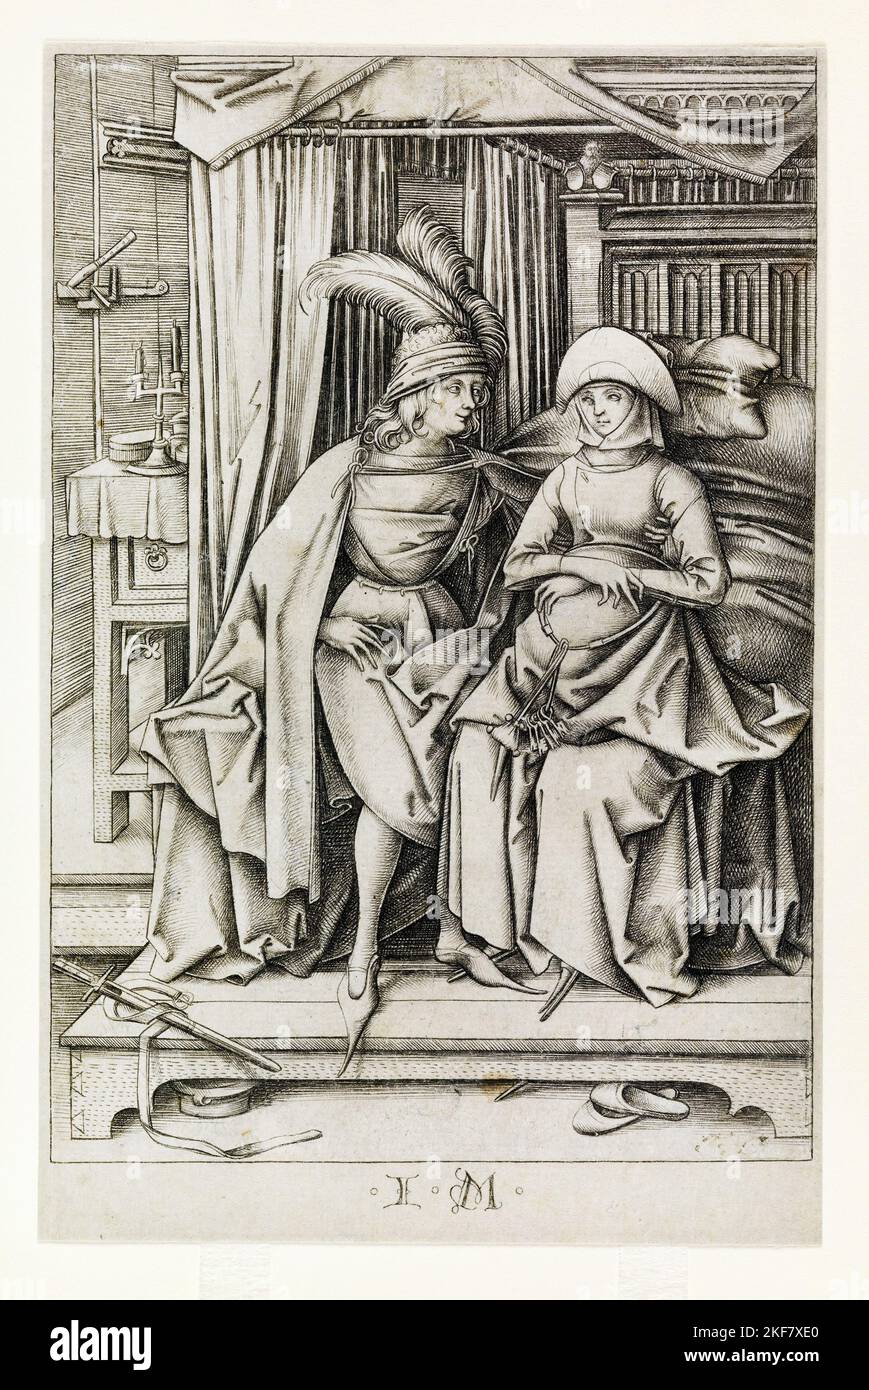 Israhel van Meckenem; coppia seduta su un letto, da Scenes of Daily Life; circa 1490; incisione; Metropolitan Museum of Art, New York City, USA. Foto Stock